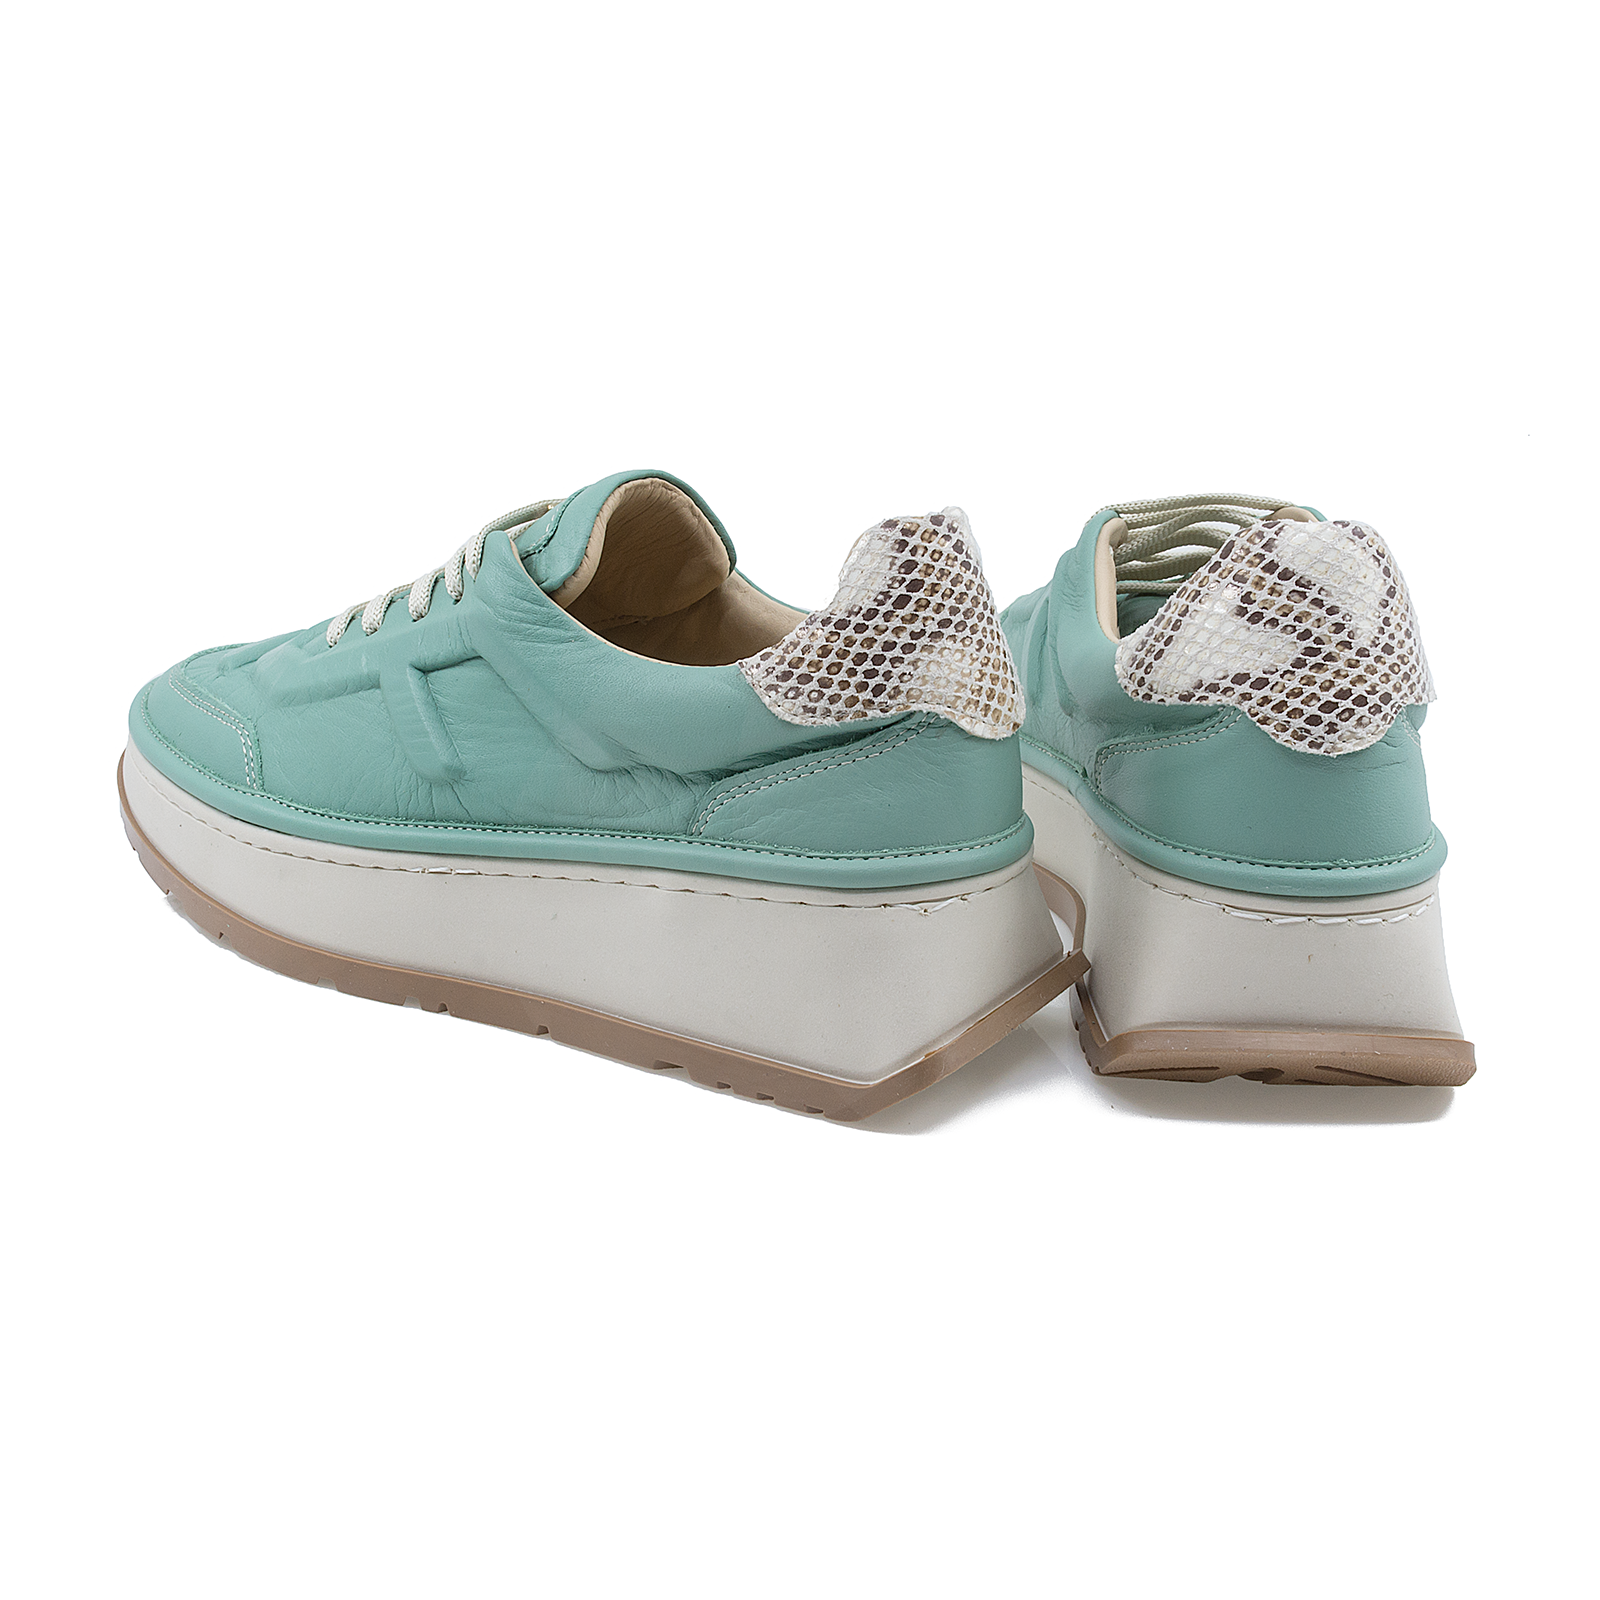 Pantofi-dama-Caspian-Cas-4056-casual-piele-naturala-vernil-nouamoda.ro-5